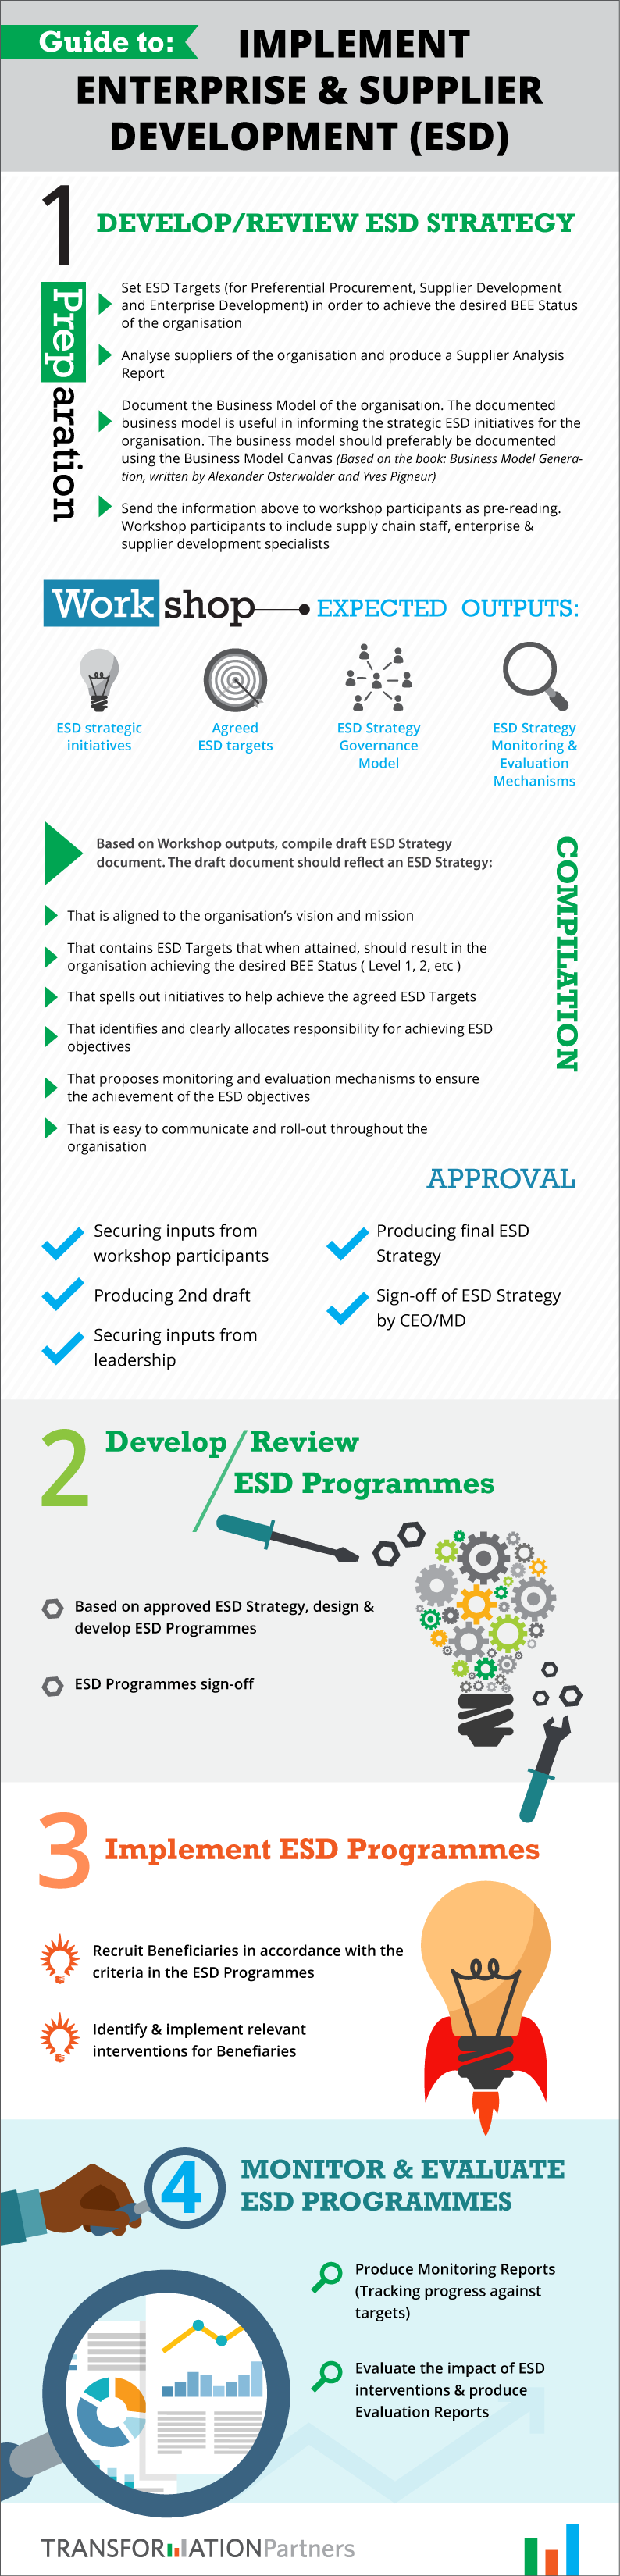 Guide to Implement Enterprise & Supplier Development